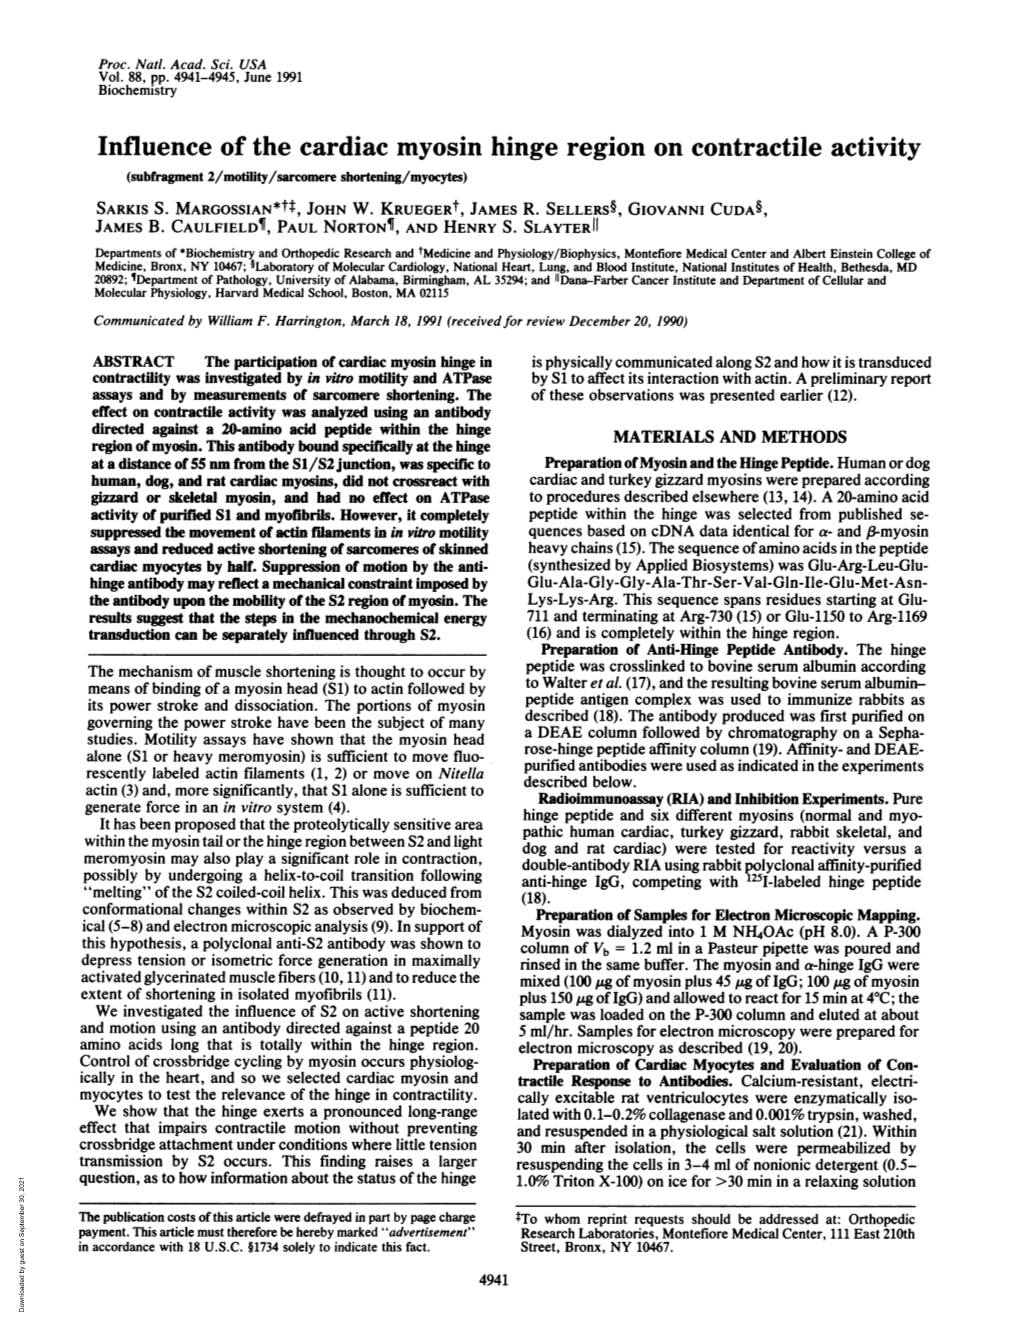 Influence of the Cardiac Myosin Hinge Region on Contractile Activity (Subfragment 2/Motility/Sarcomere Shortening/Myocytes) SARKIS S